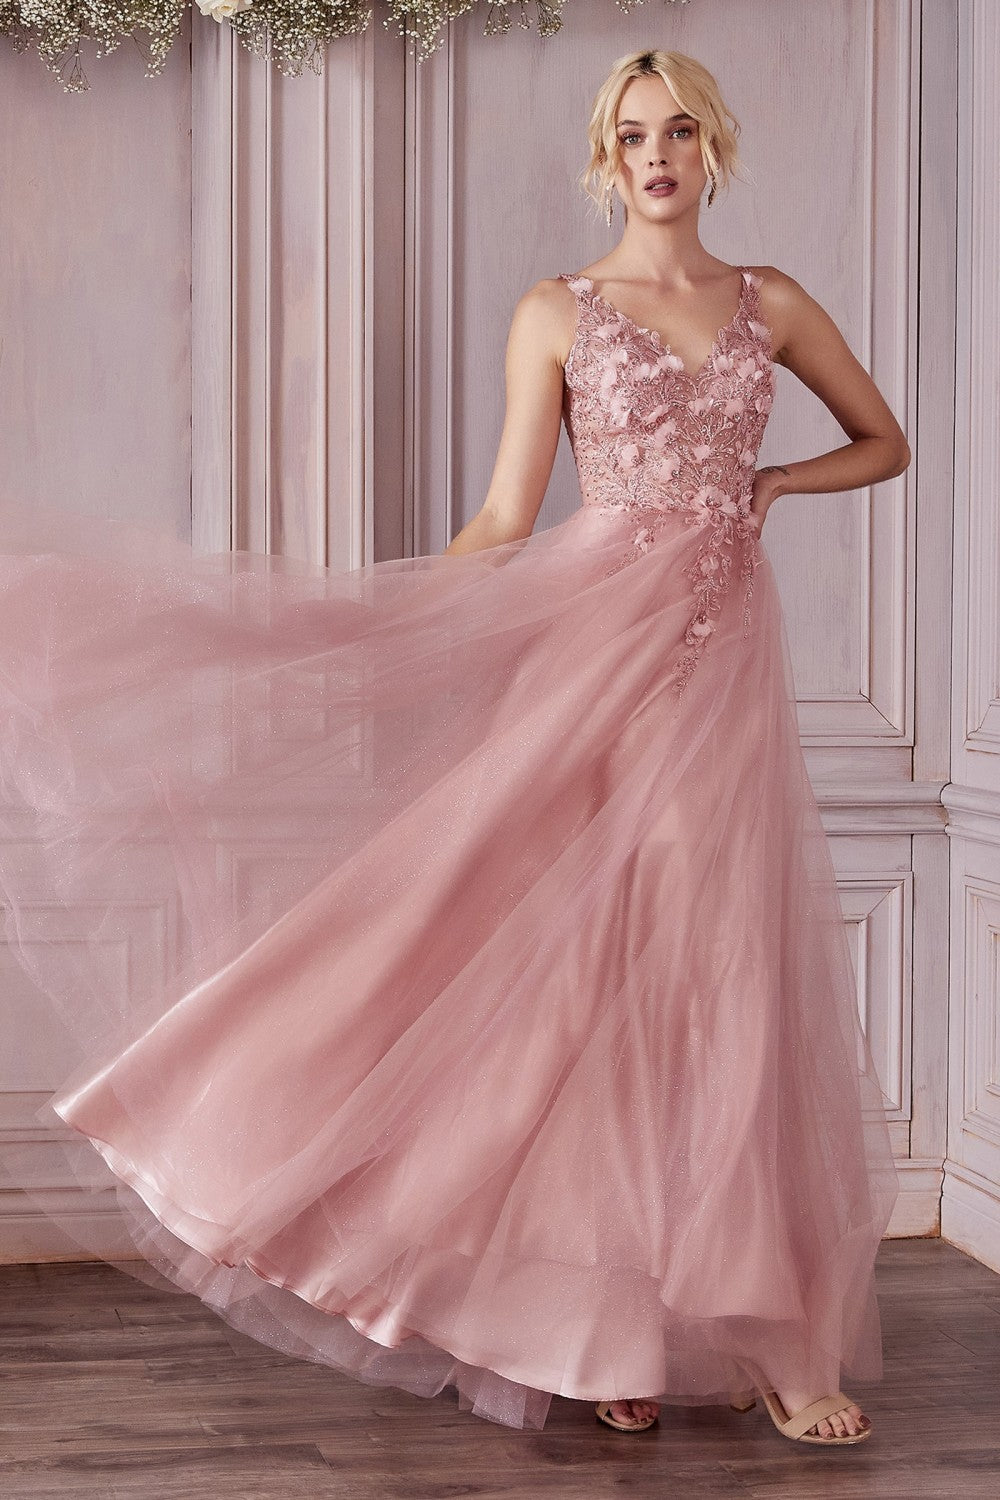 Memories Lace & Tulle Prom Dress C181ER-Blush